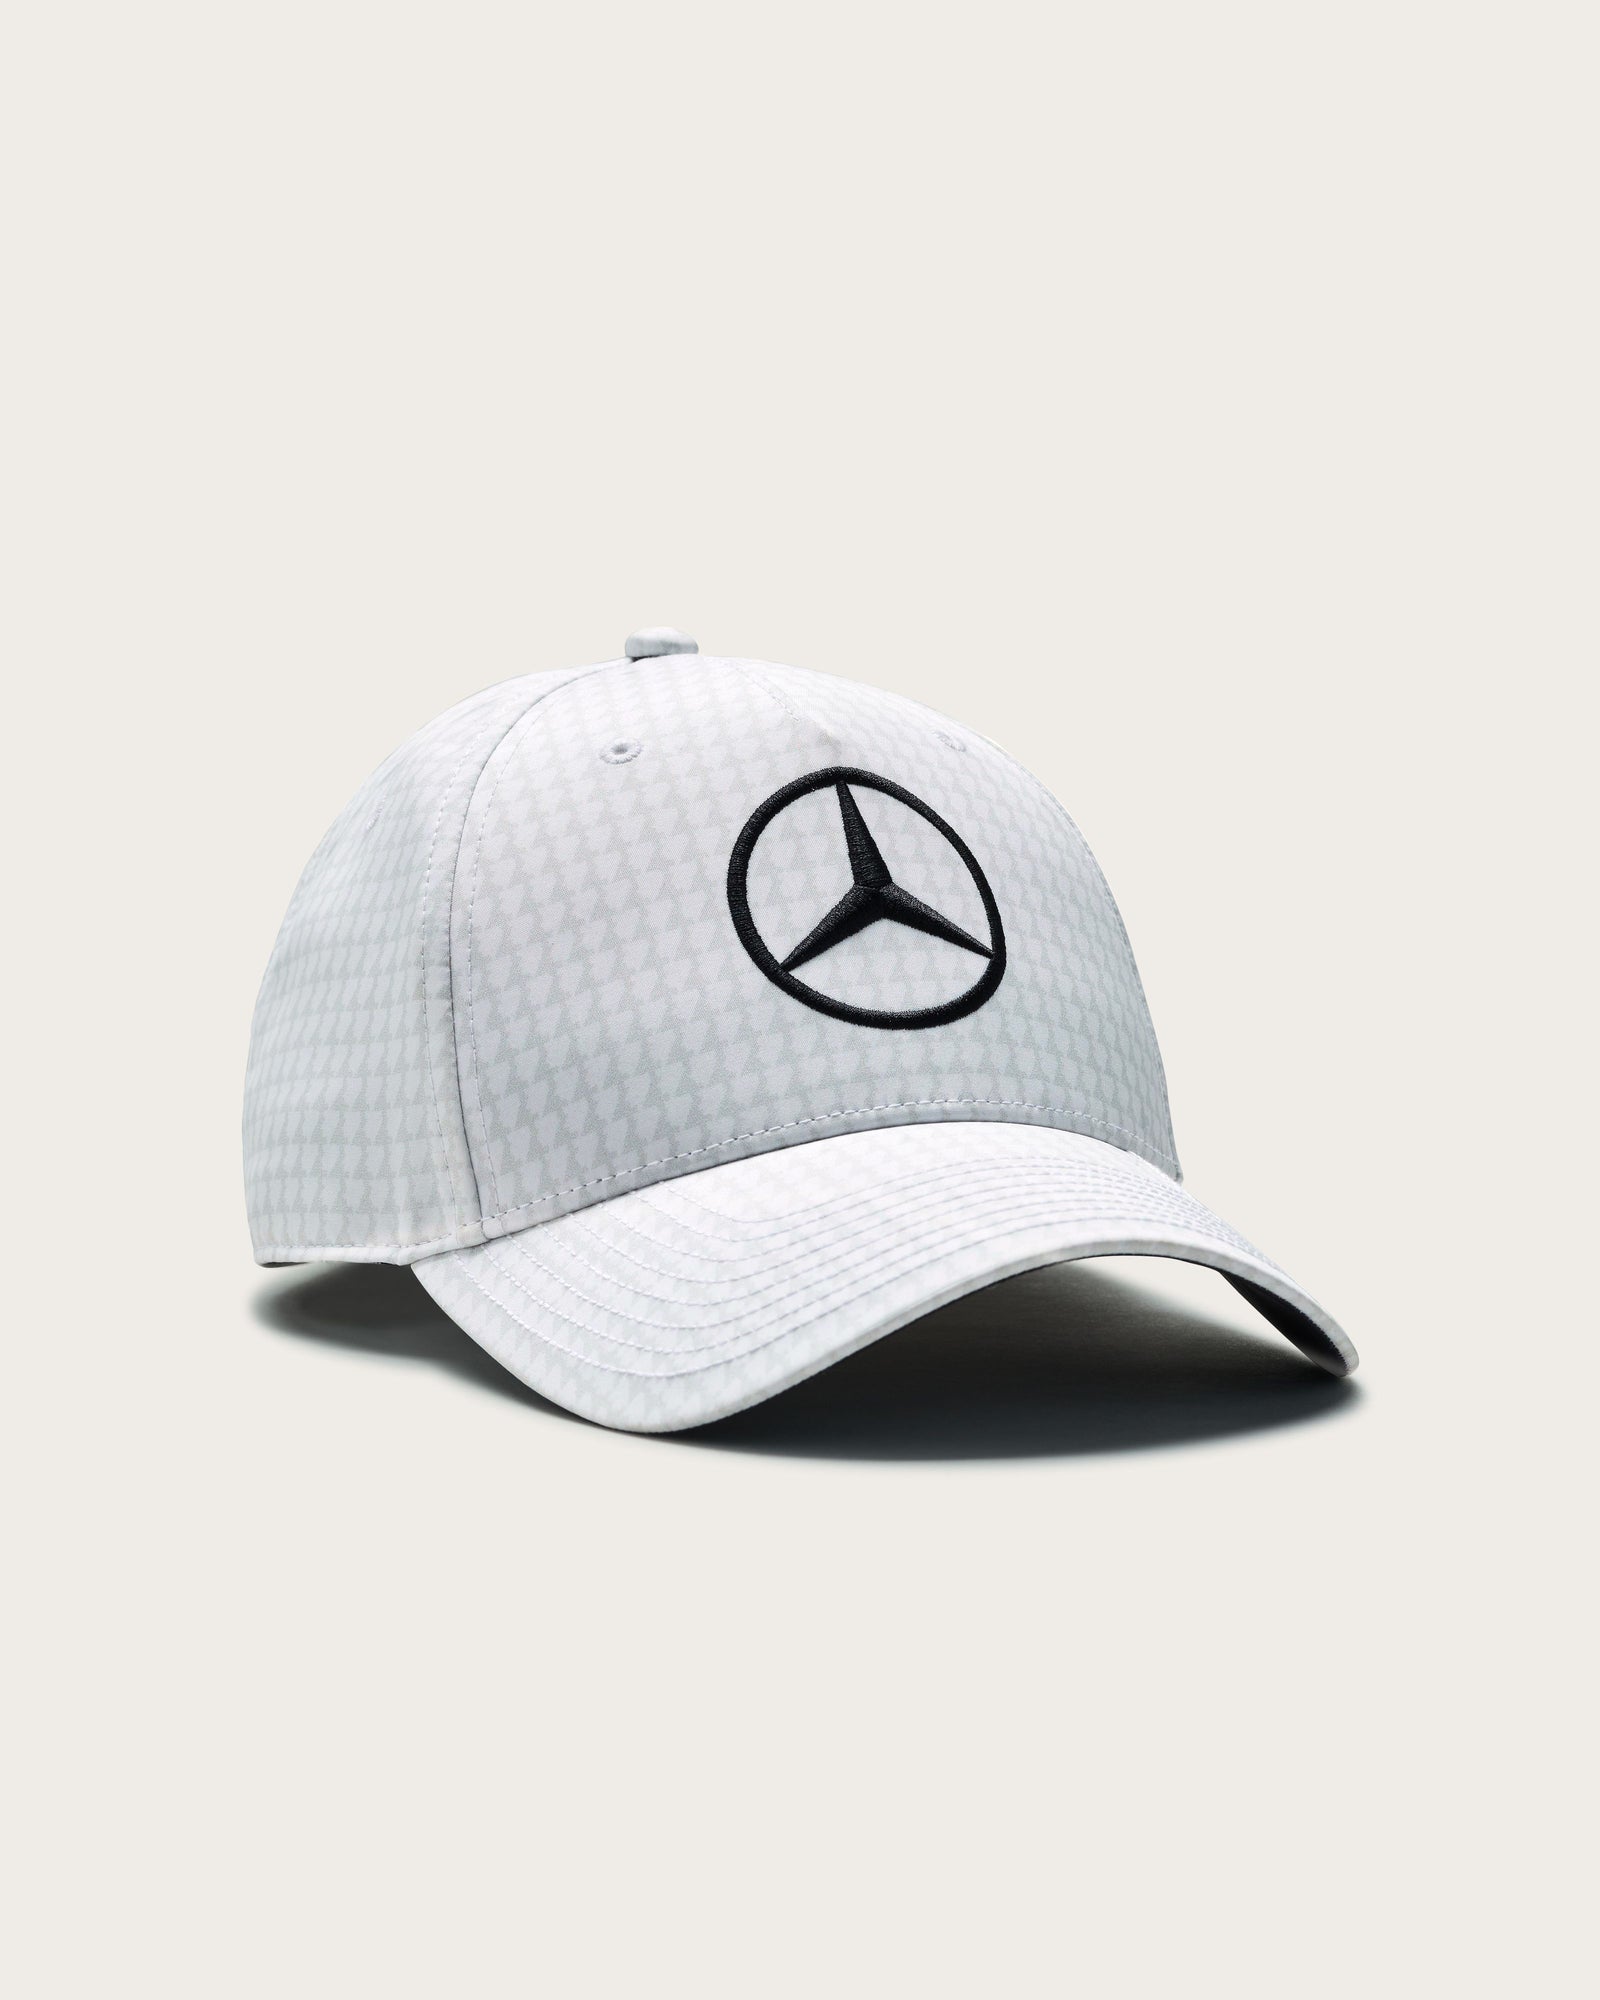 Mercedes F1 Team Merchandise F1 | Store Mercedes-AMG Official